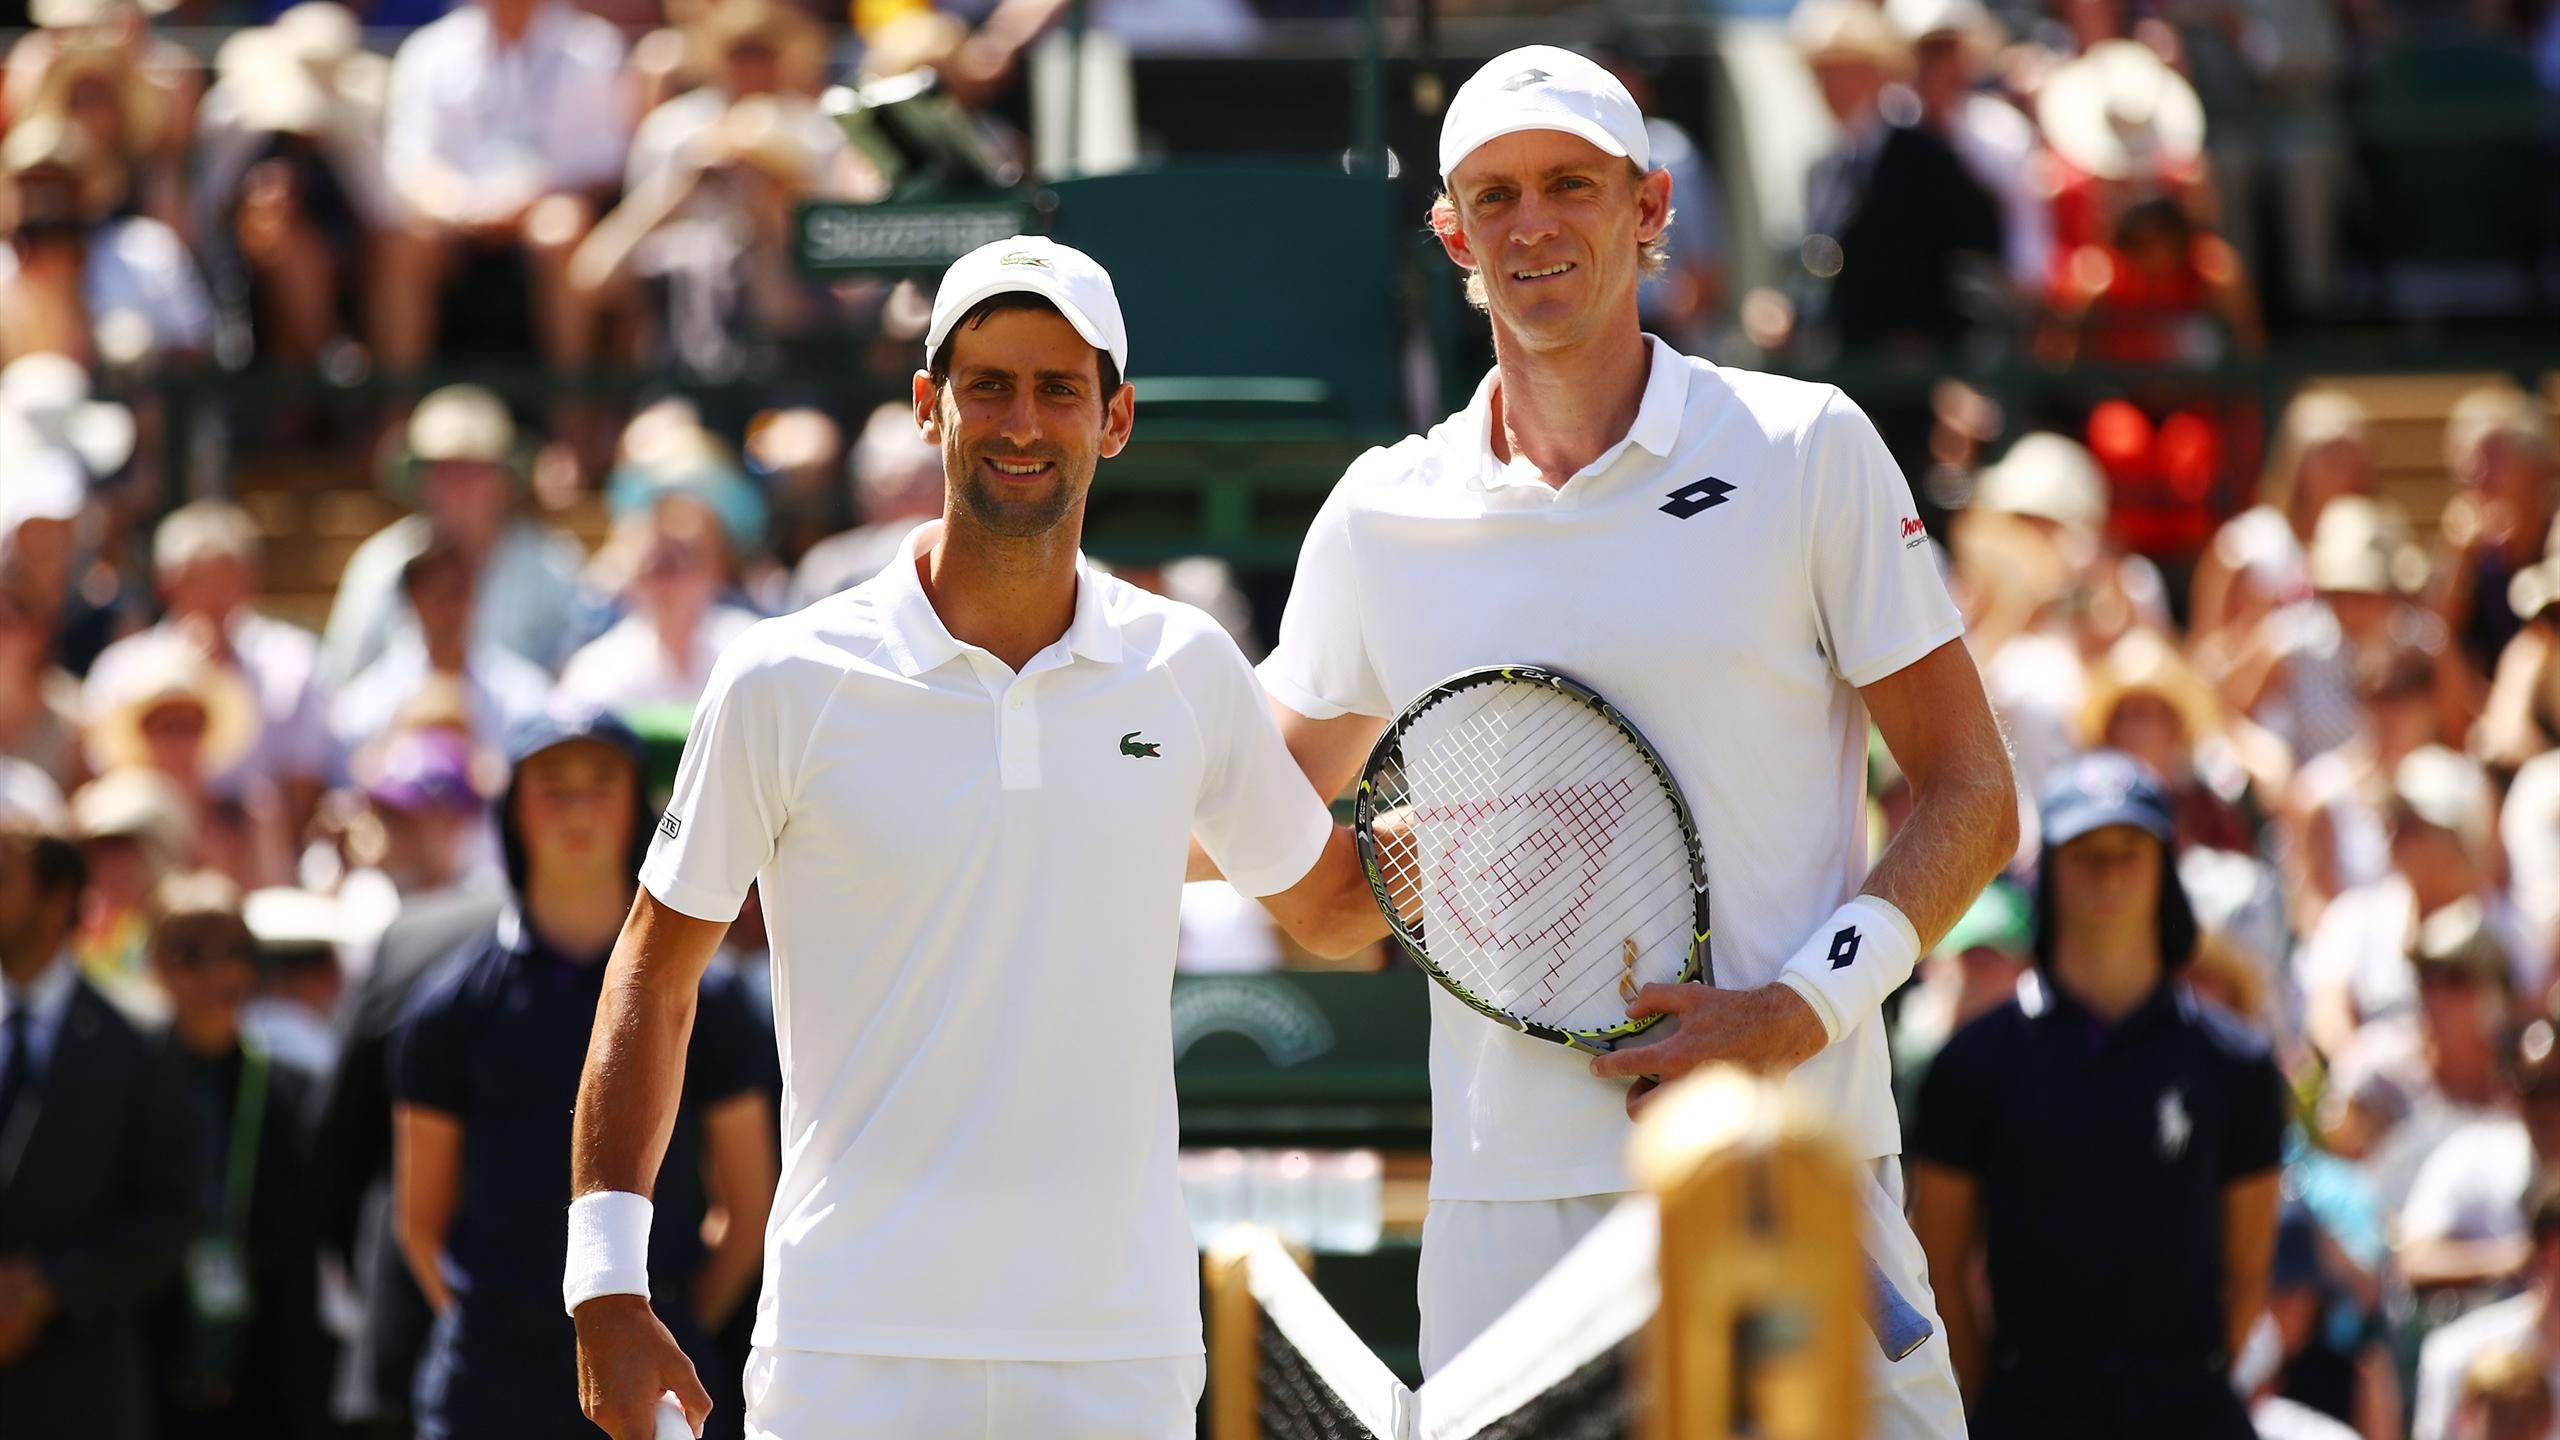 Wimbledon 2018 - So lief das Finale Djokovic dominiert gegen Anderson